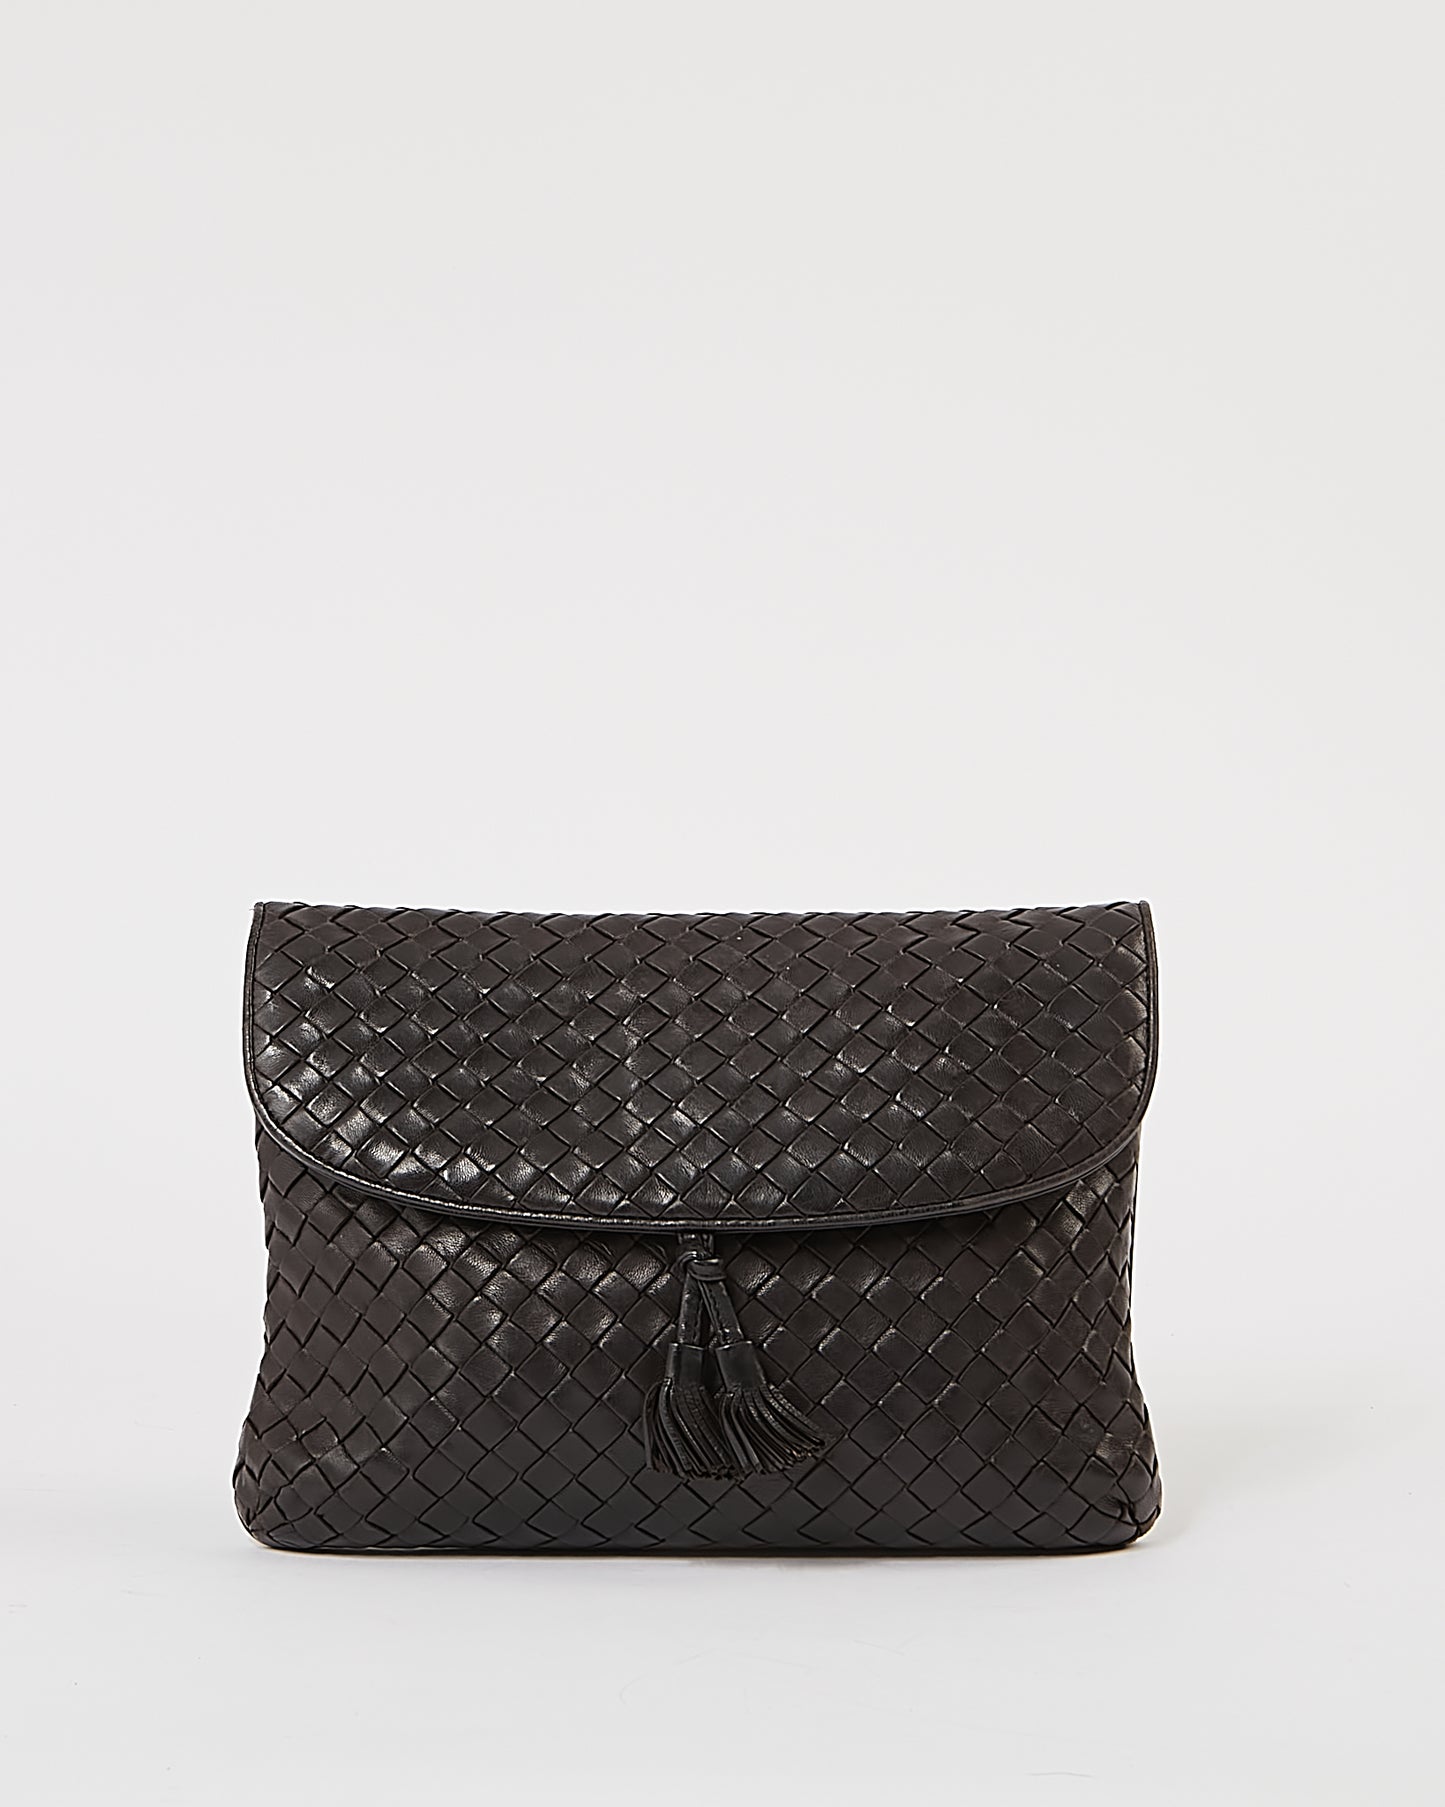 Bottega Veneta Black Intrecciato Leather Shoulder Bag